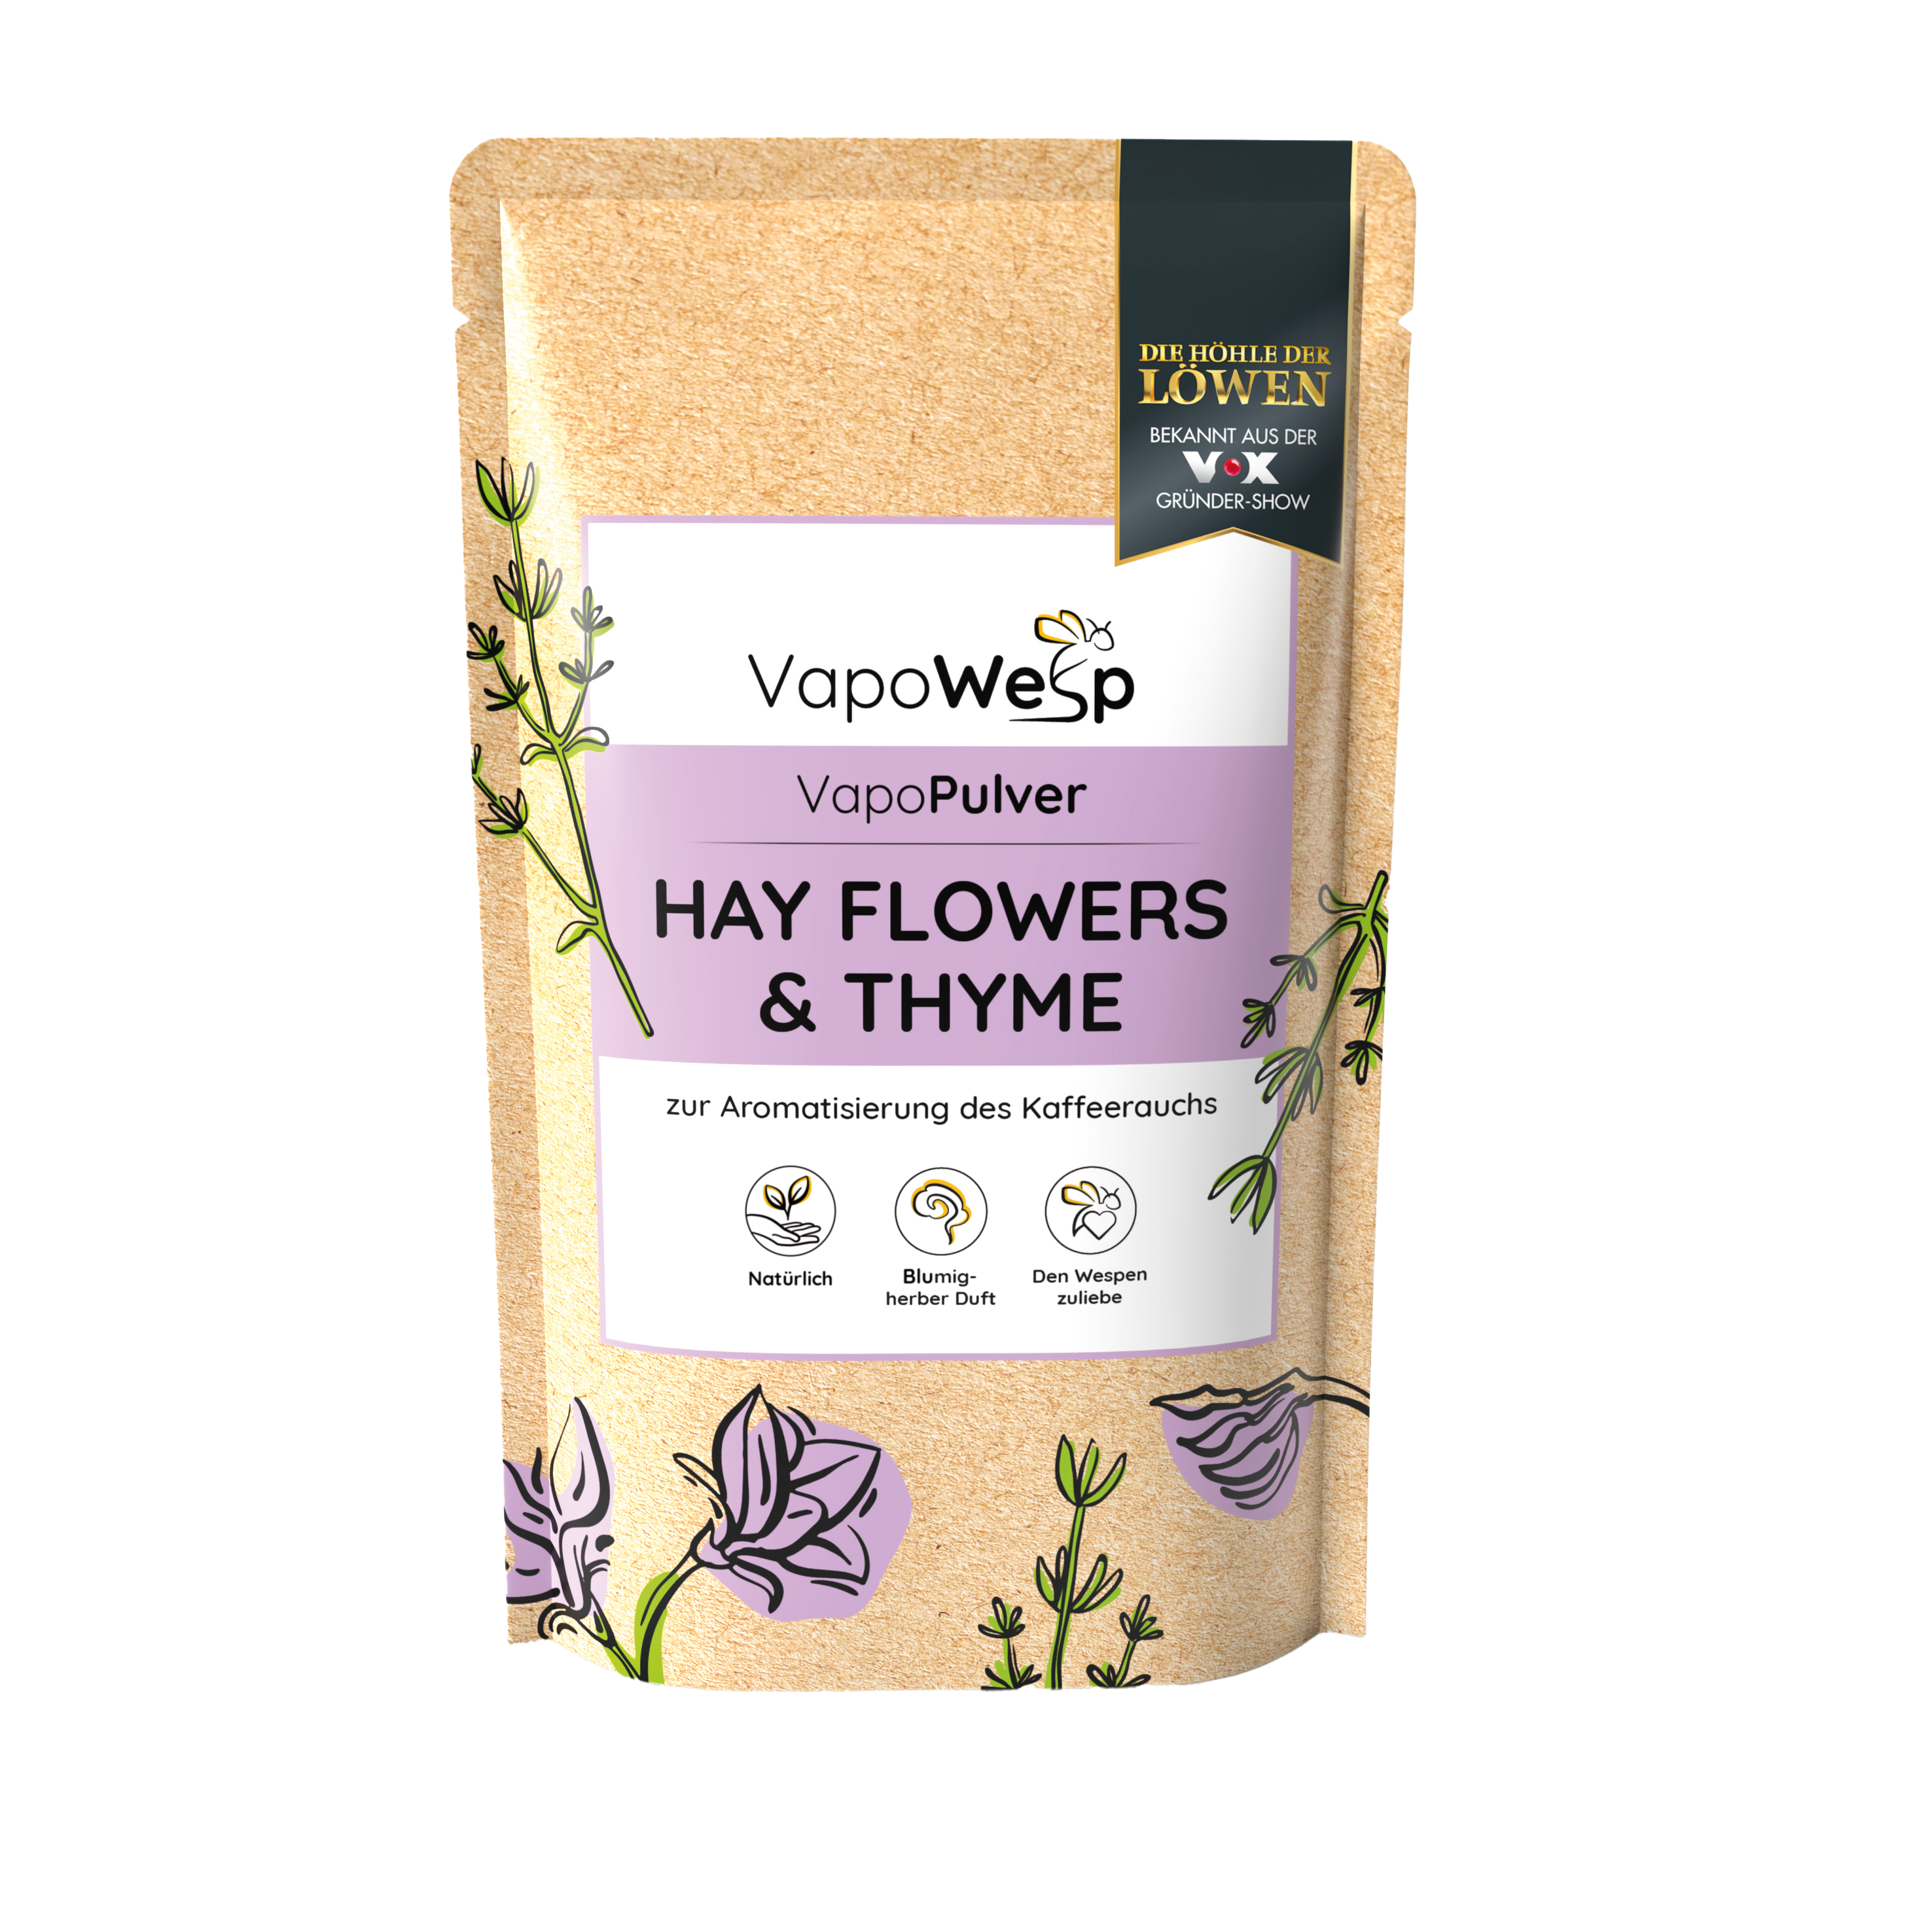 VapoPulver "Hay Flowers & Thyme" 100g